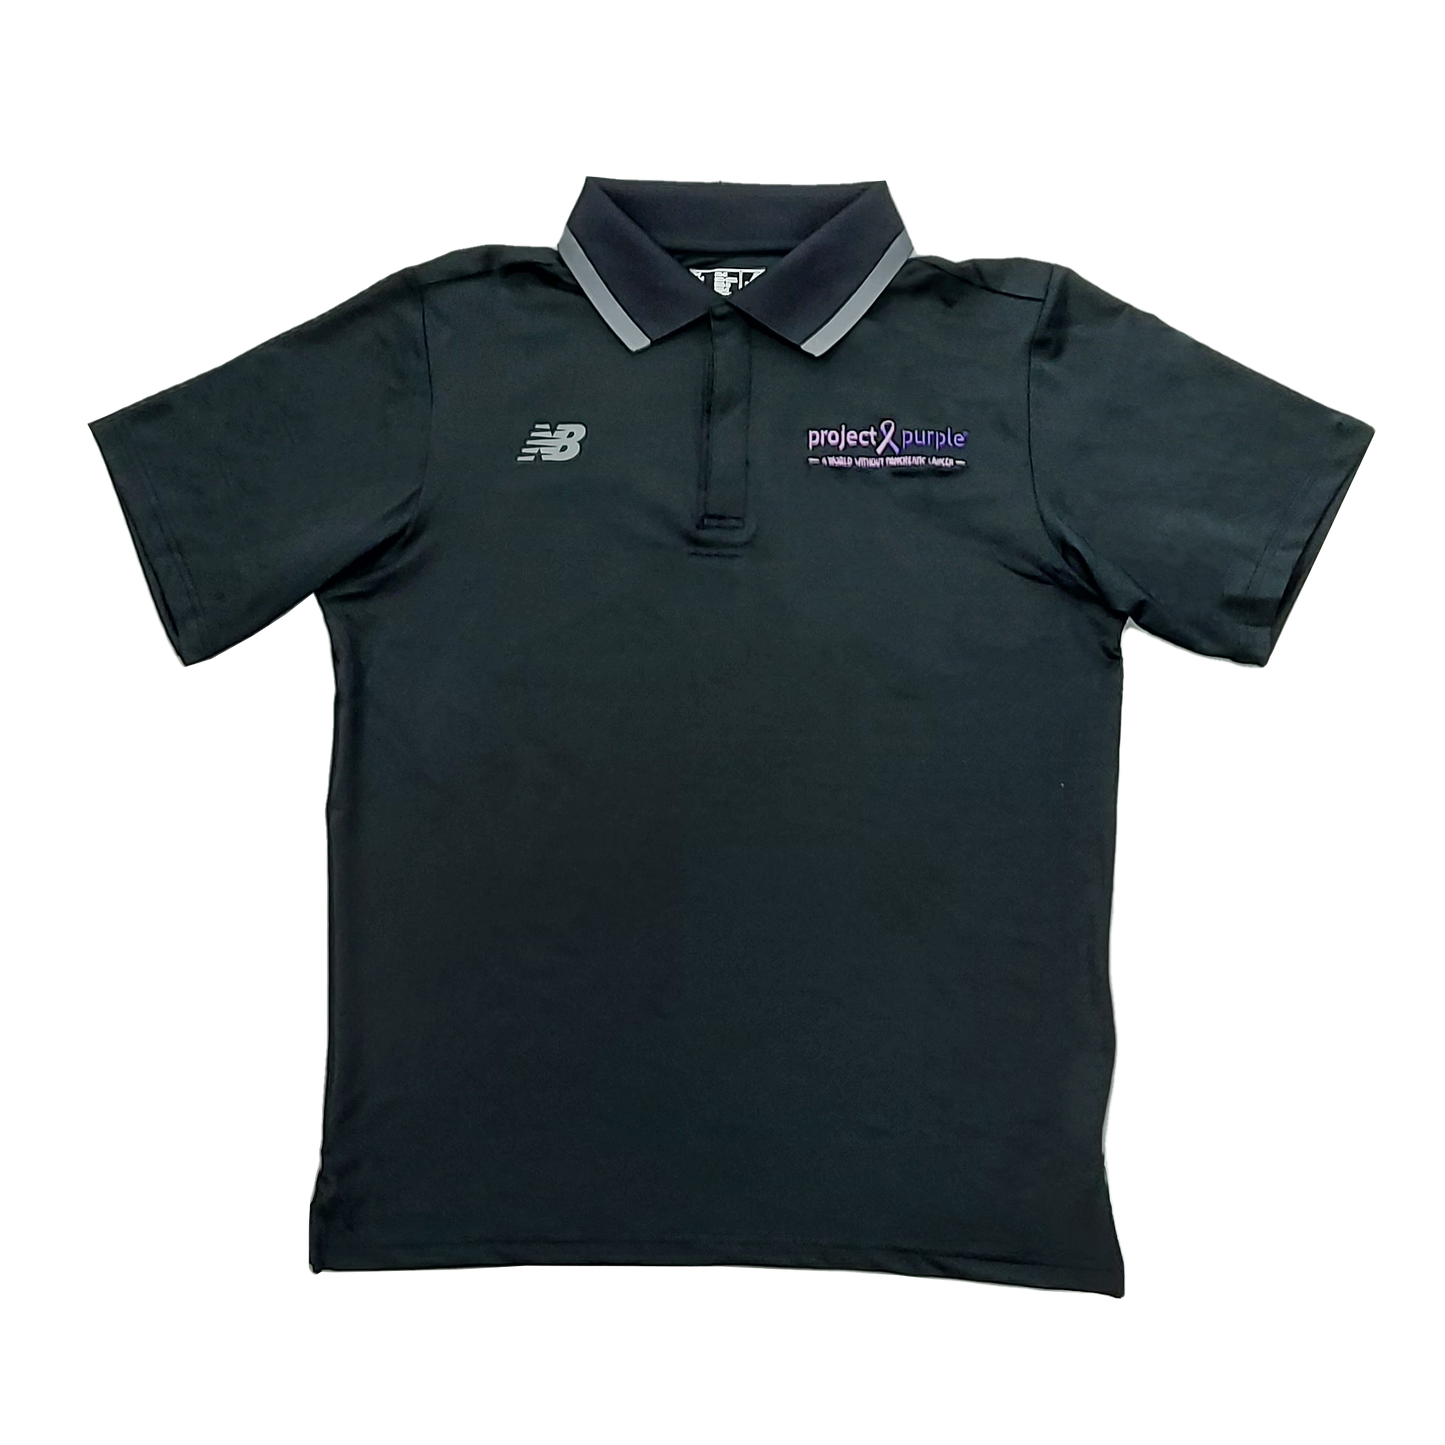 Black New Balance Golf Shirt with Project Purple Logo